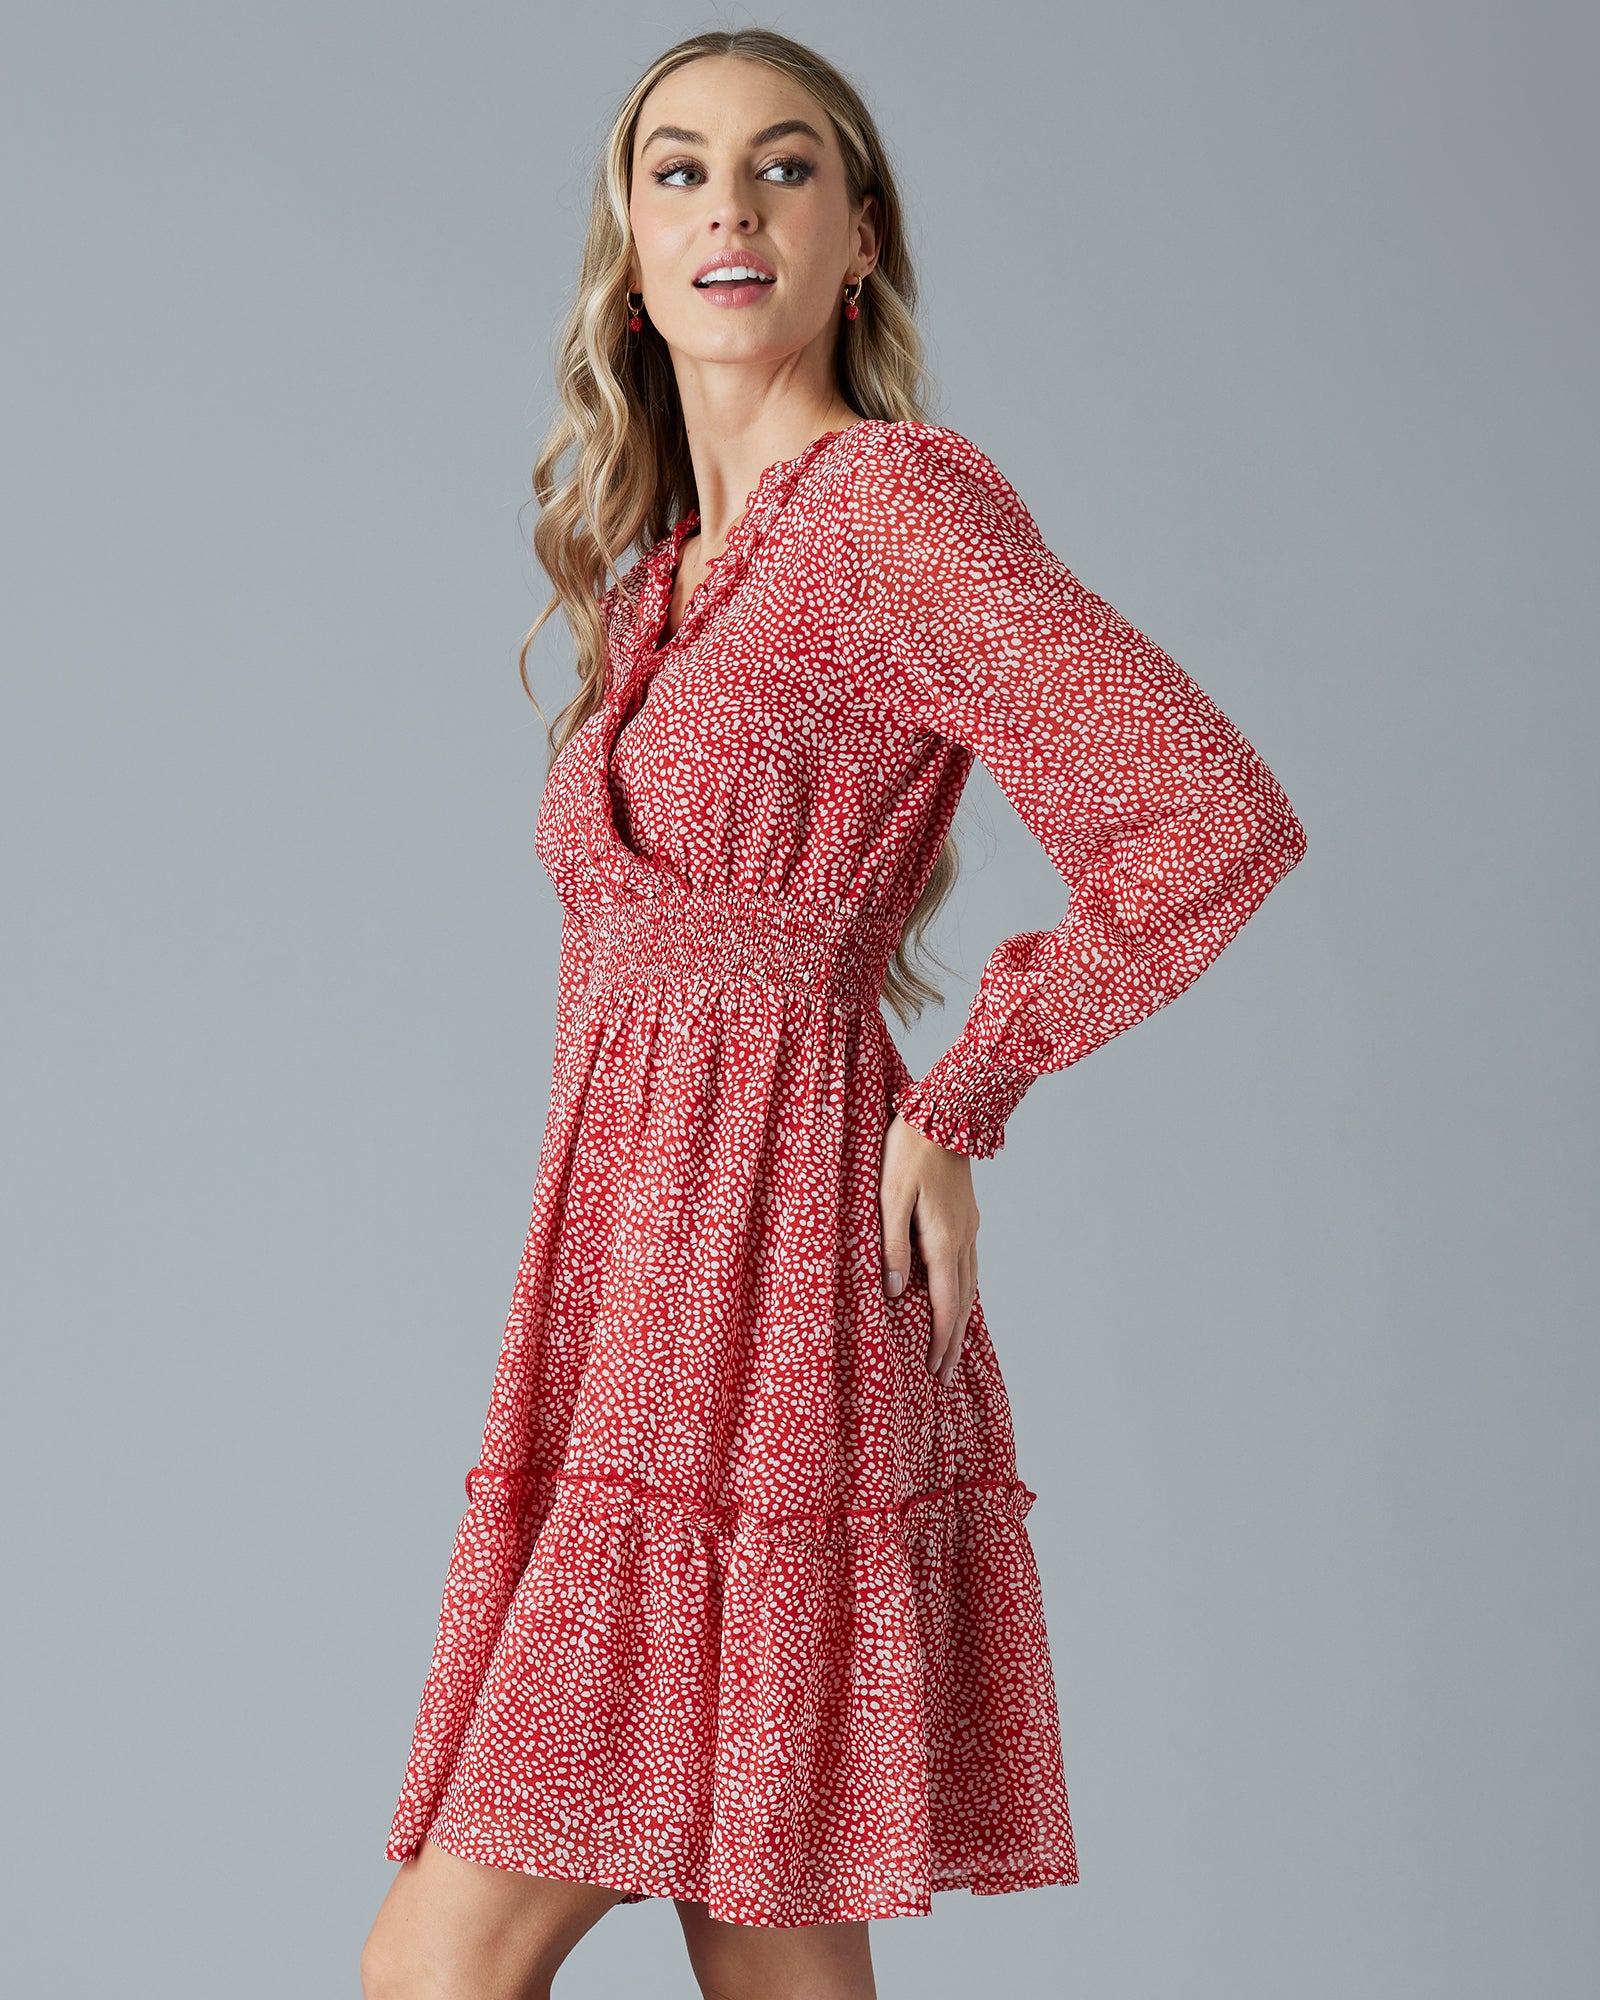 Woman wearing a floral print, long sleeve, knee-length dress.